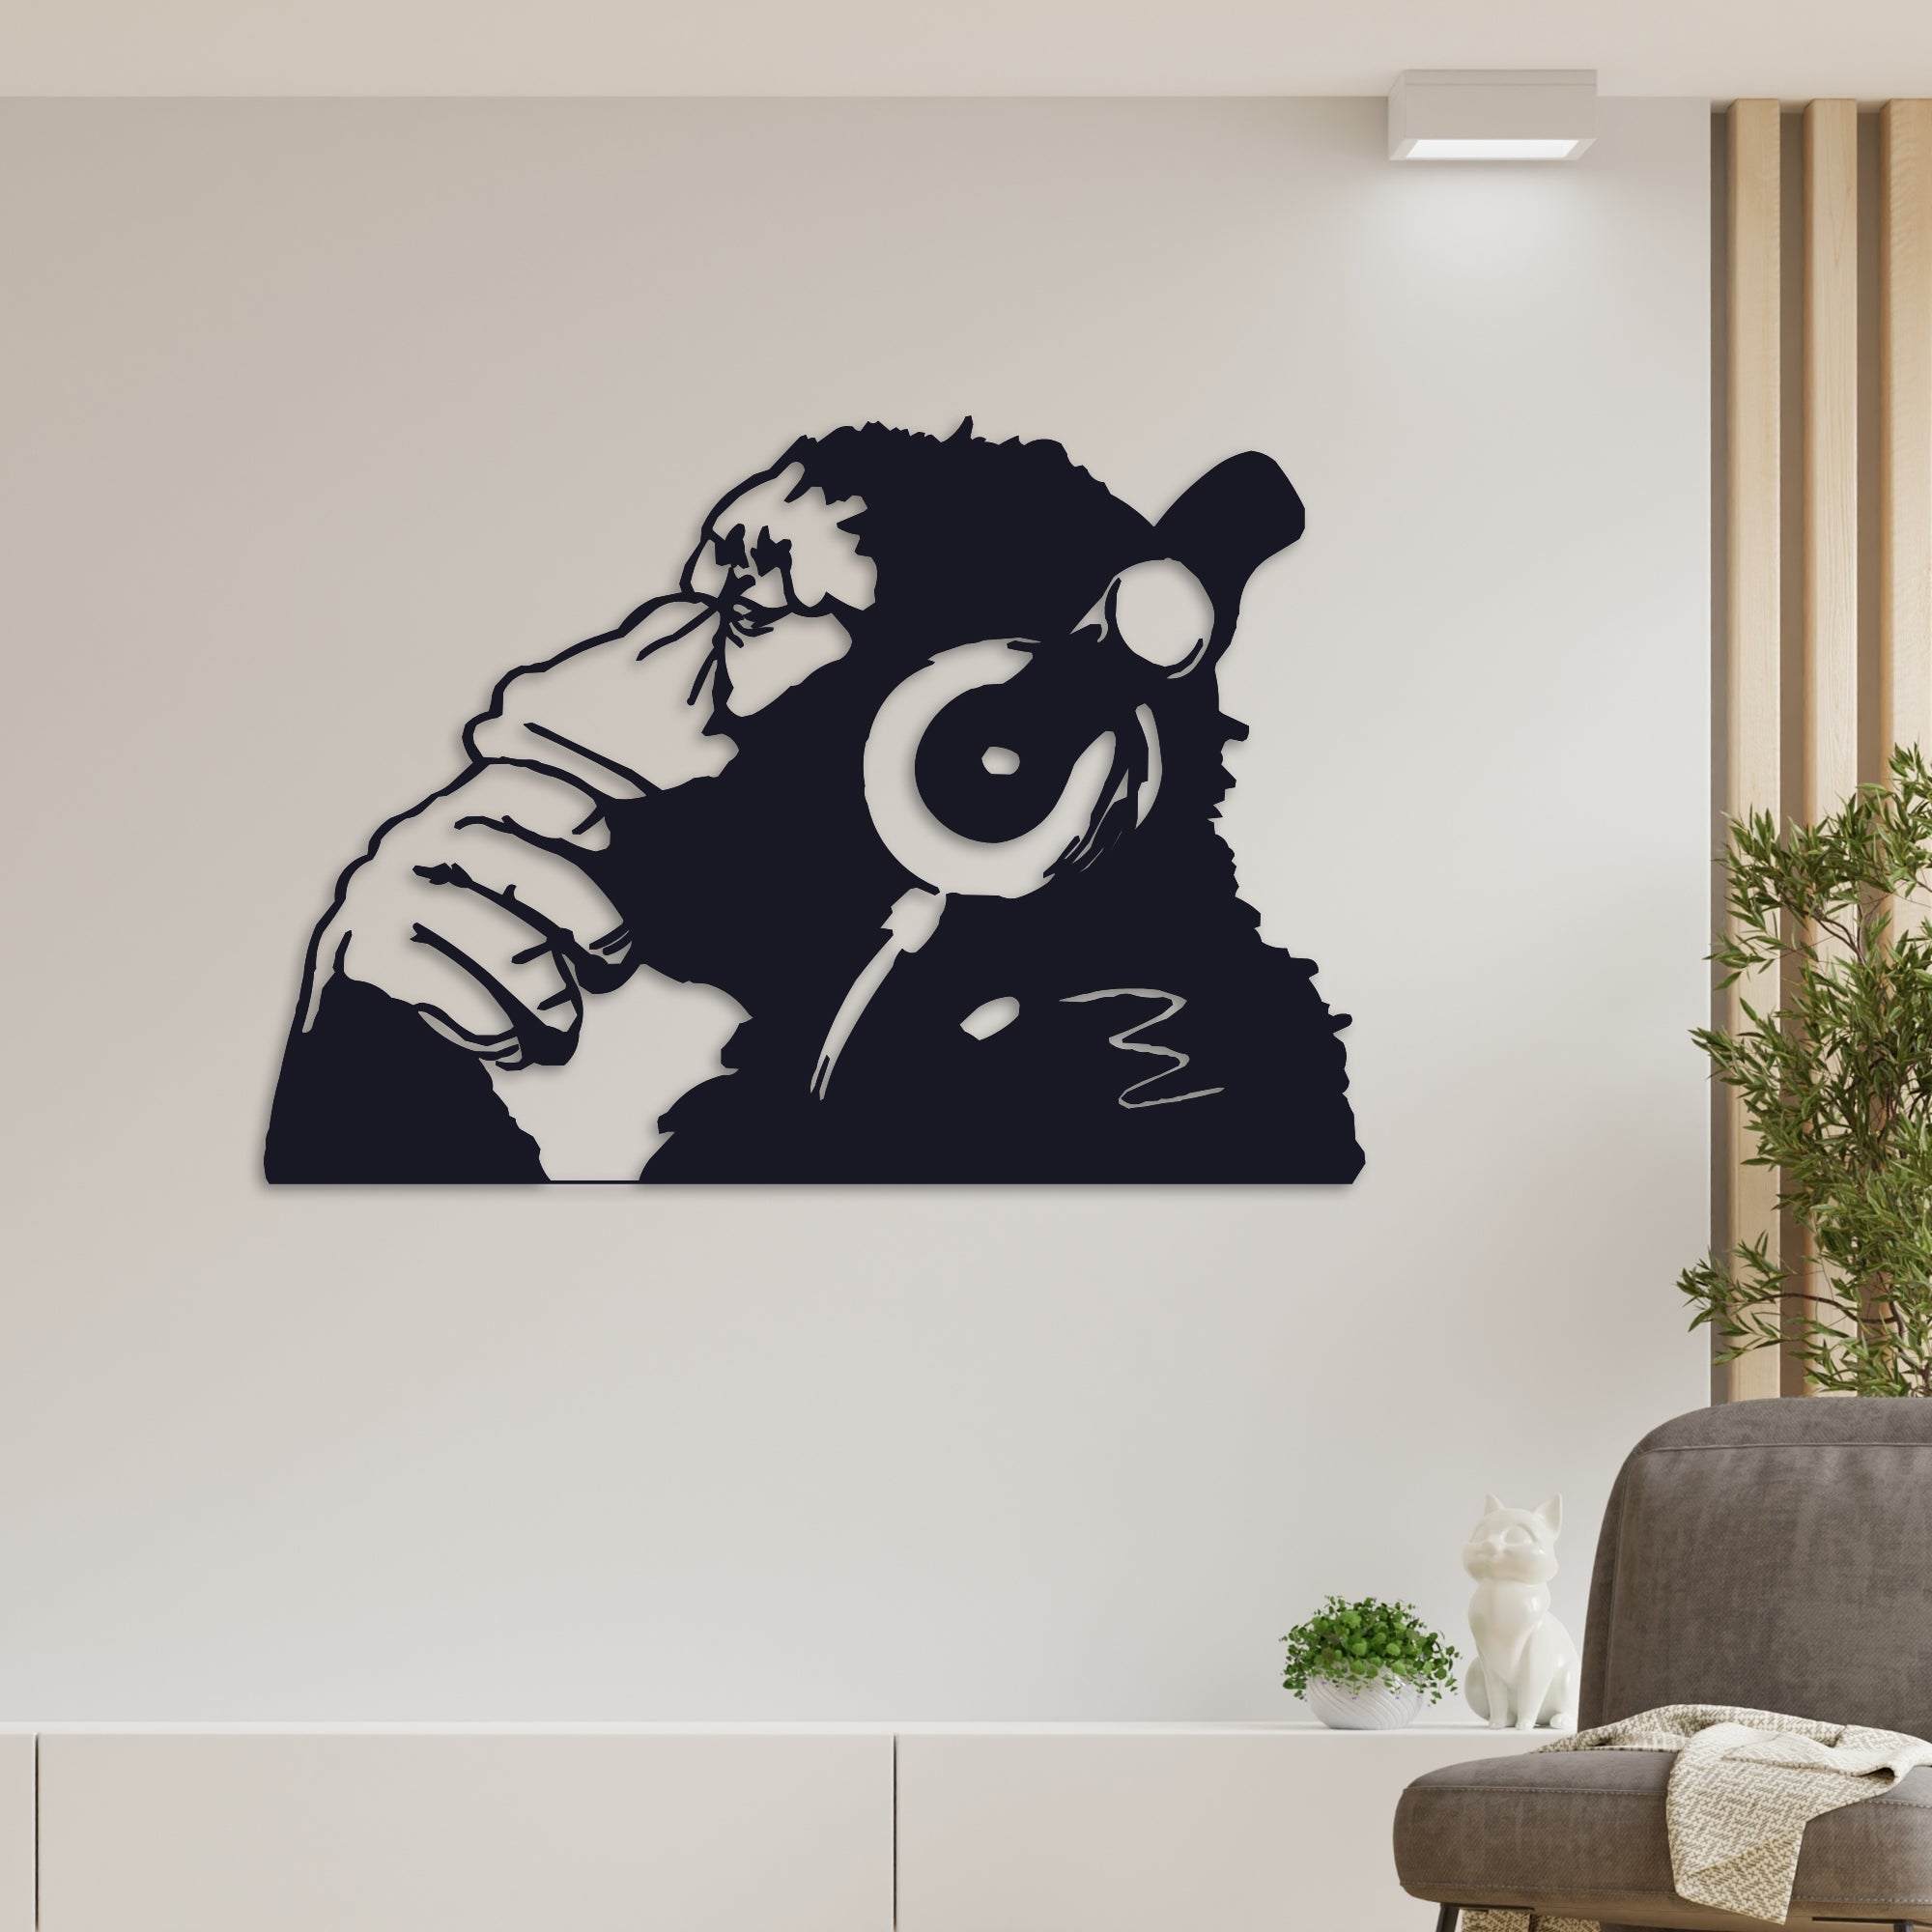 ・"Banksy Monkey Beats"・Premium Metal Wall Art - Limited Edition